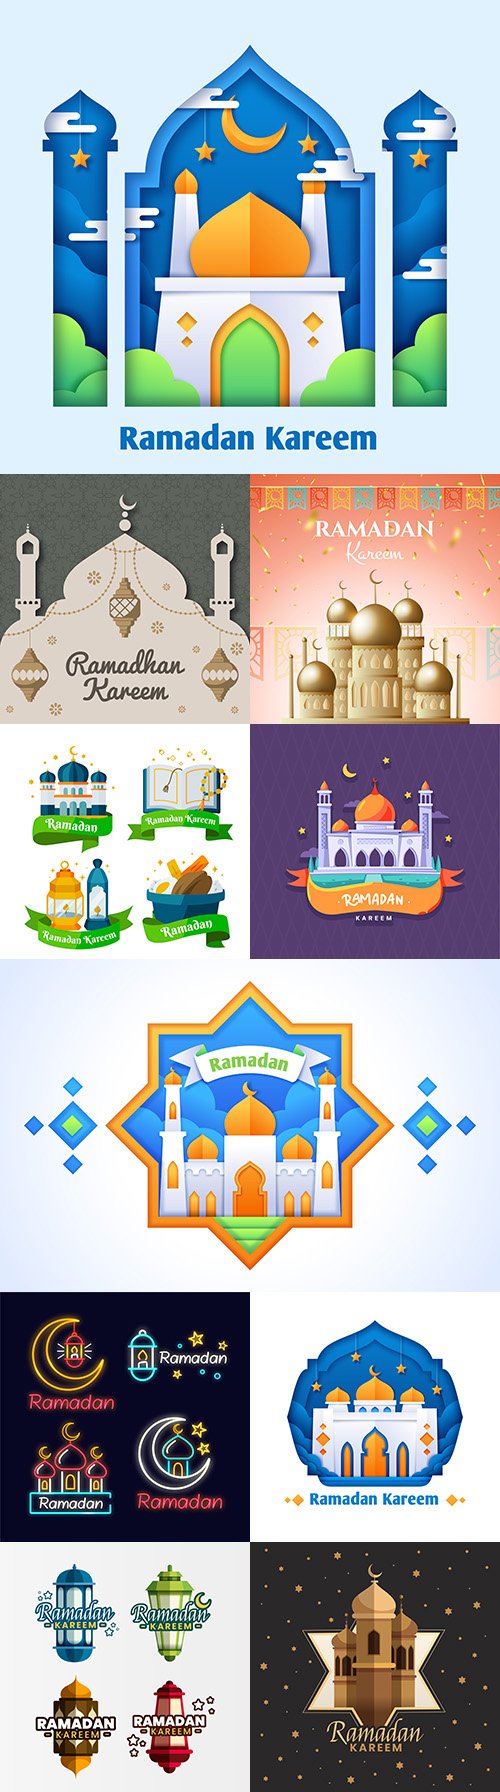 Ramadan Kareem design illustrations in flat style